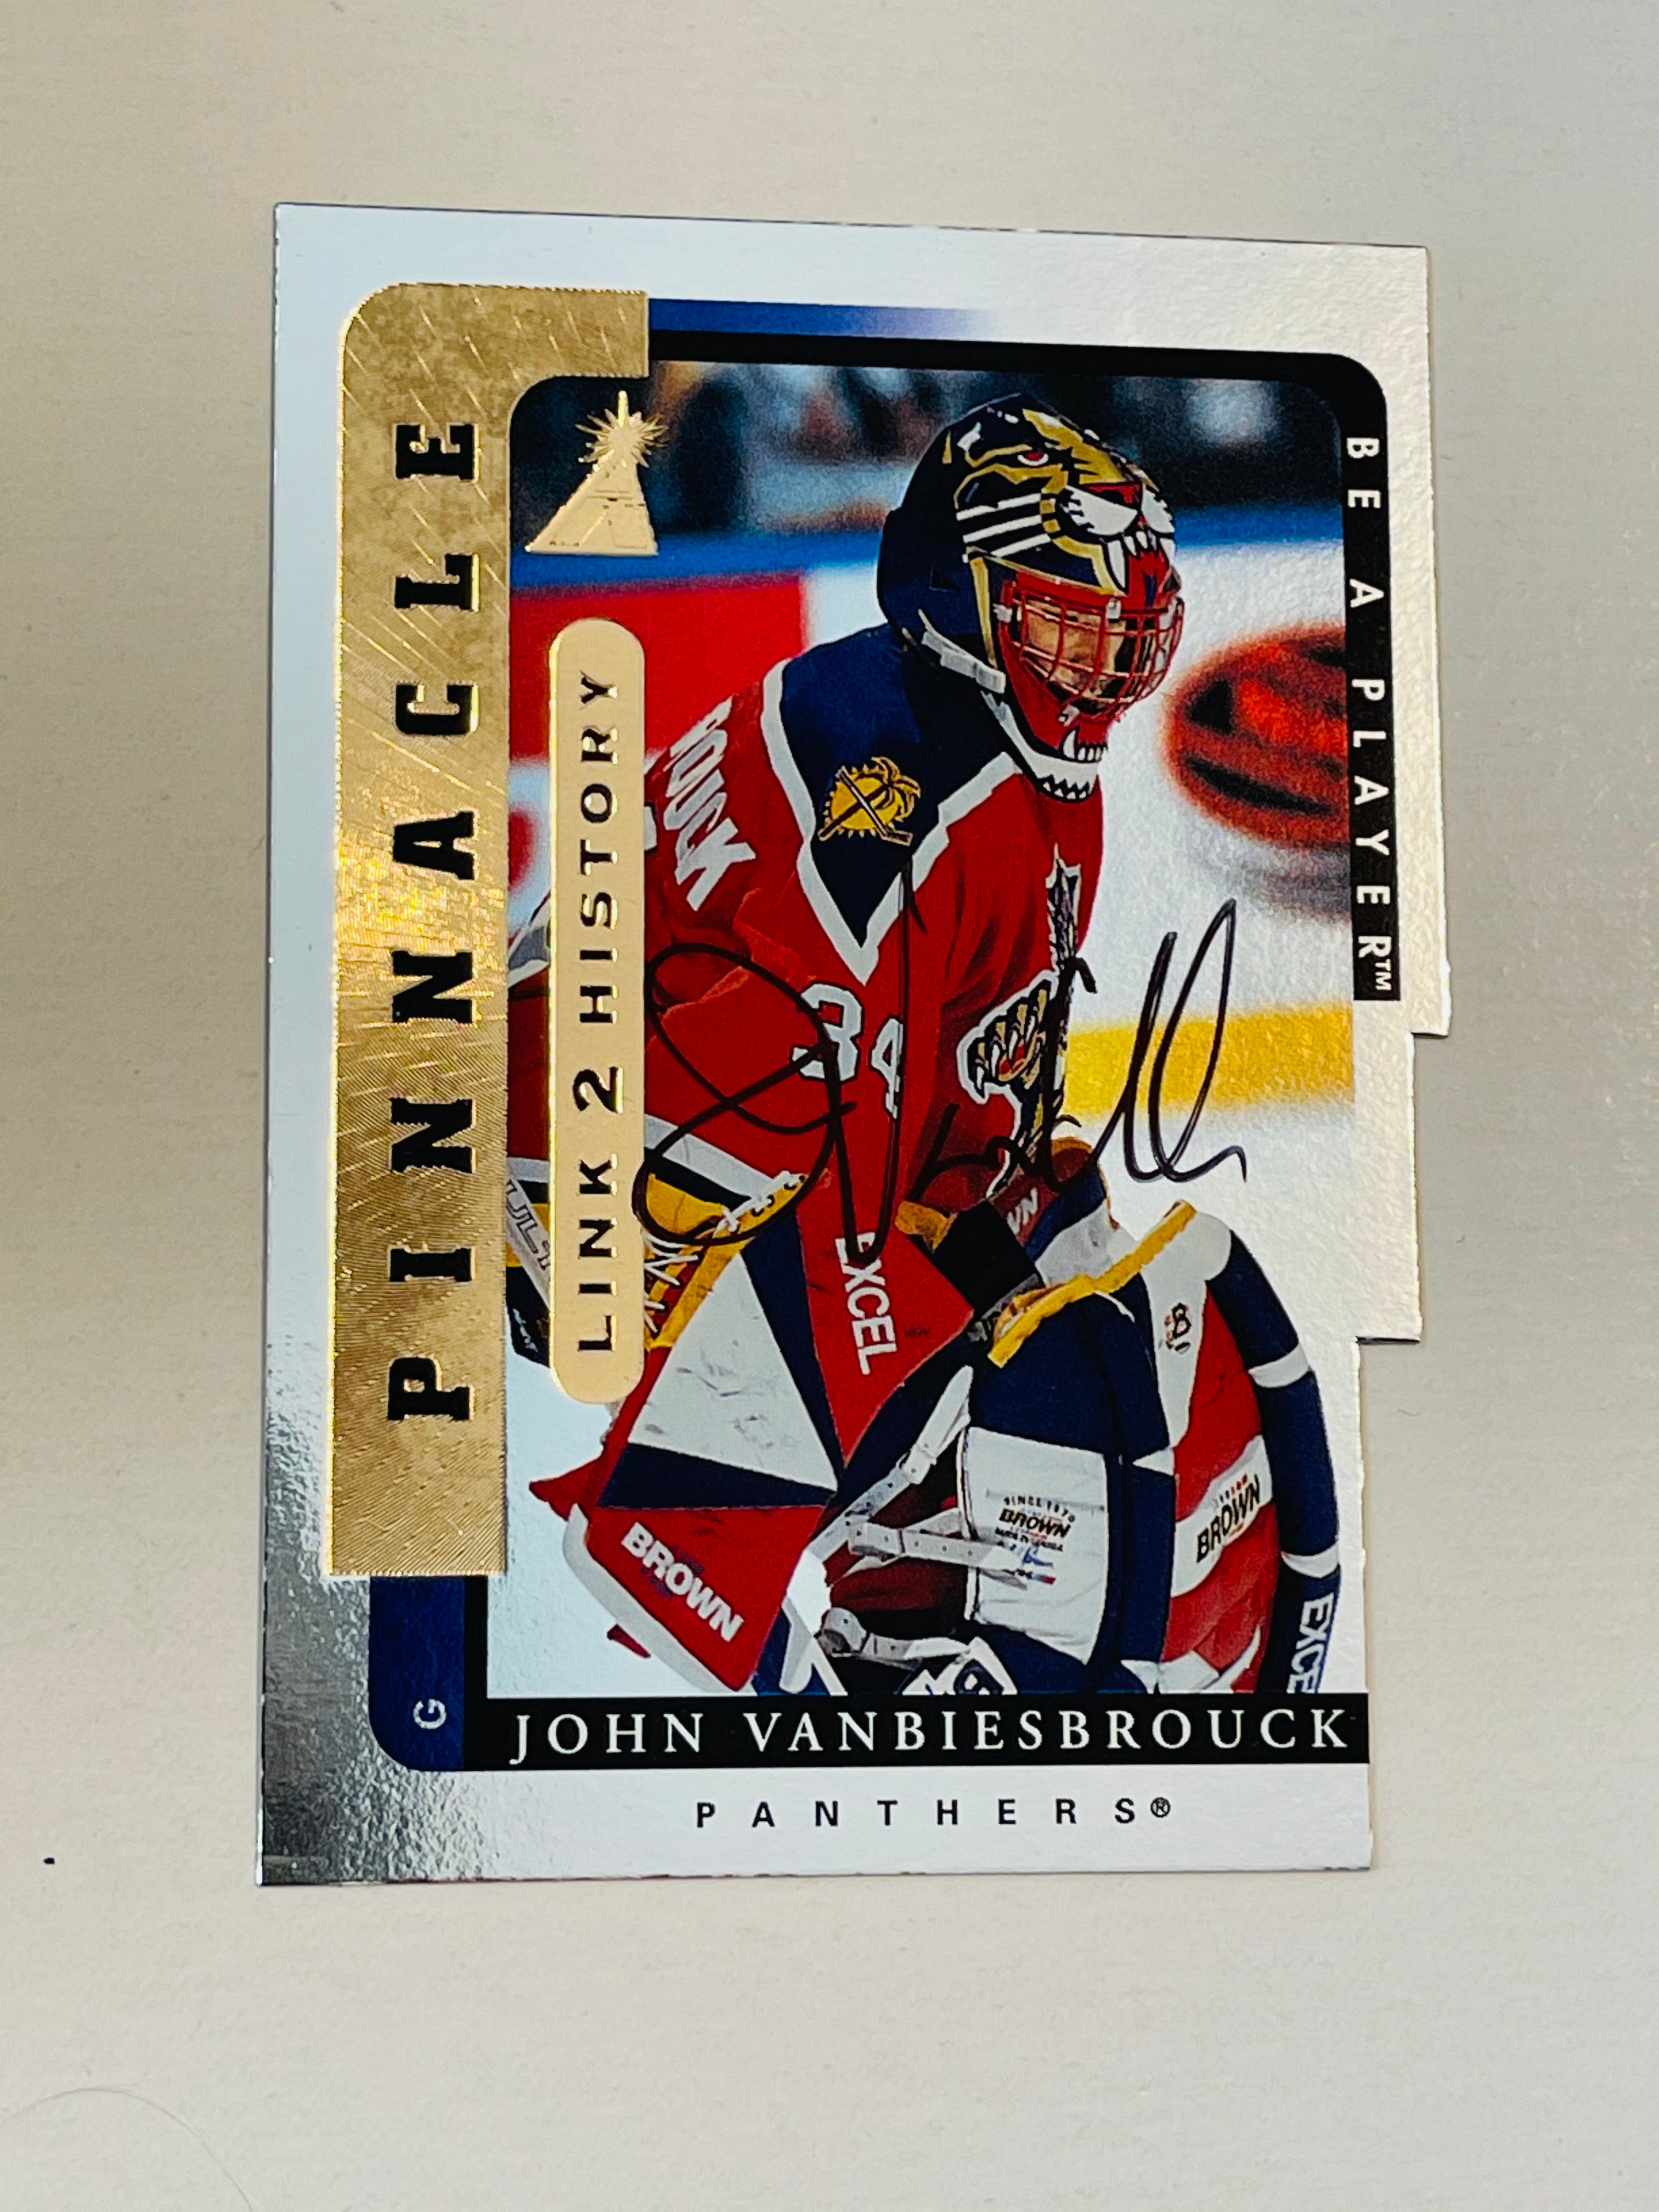 John Vanbiesbrouck Score Pinnacle hockey autograph insert card 1997